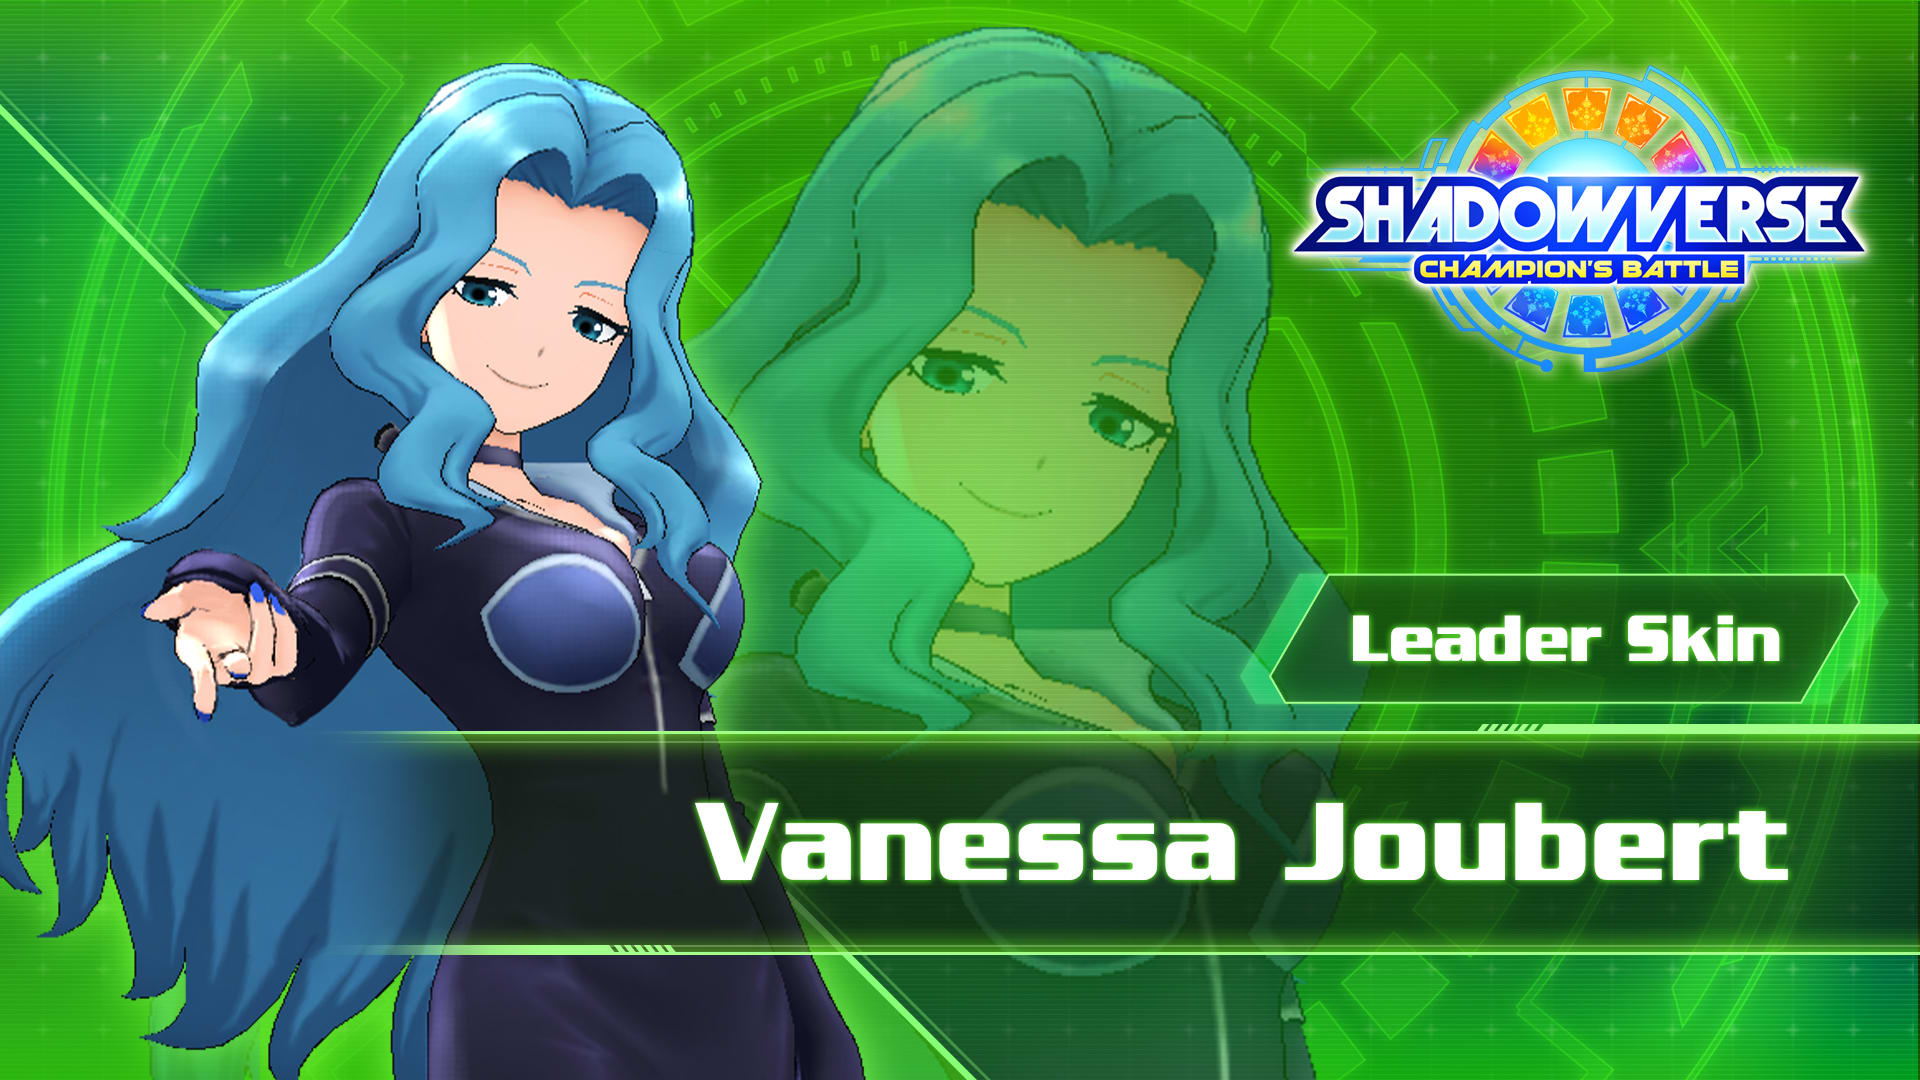 Leader Skin: "Vanessa Joubert"